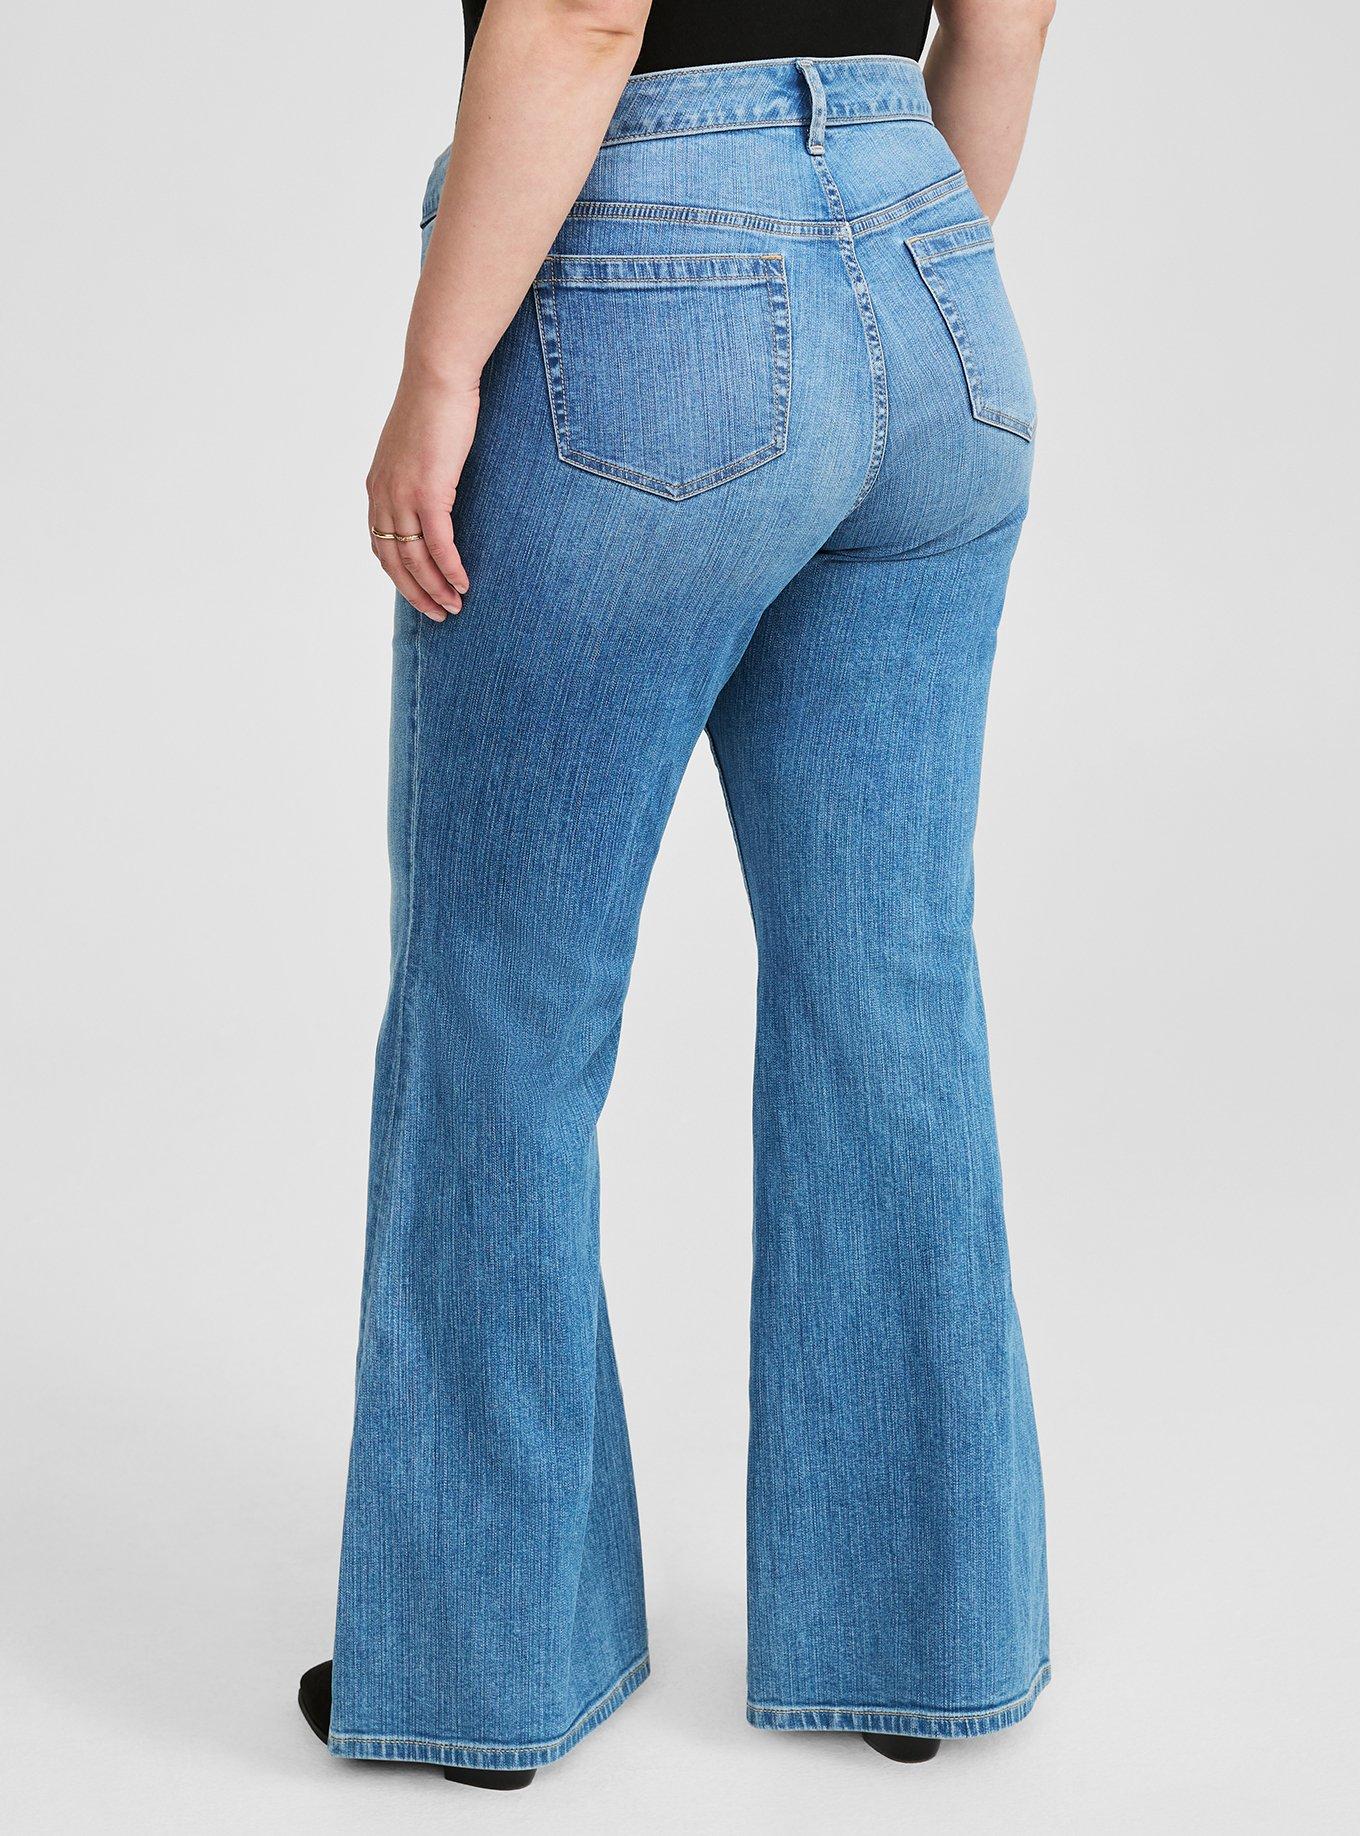 Plus Size Super Flared Jeans  Super flare jeans, Plus size